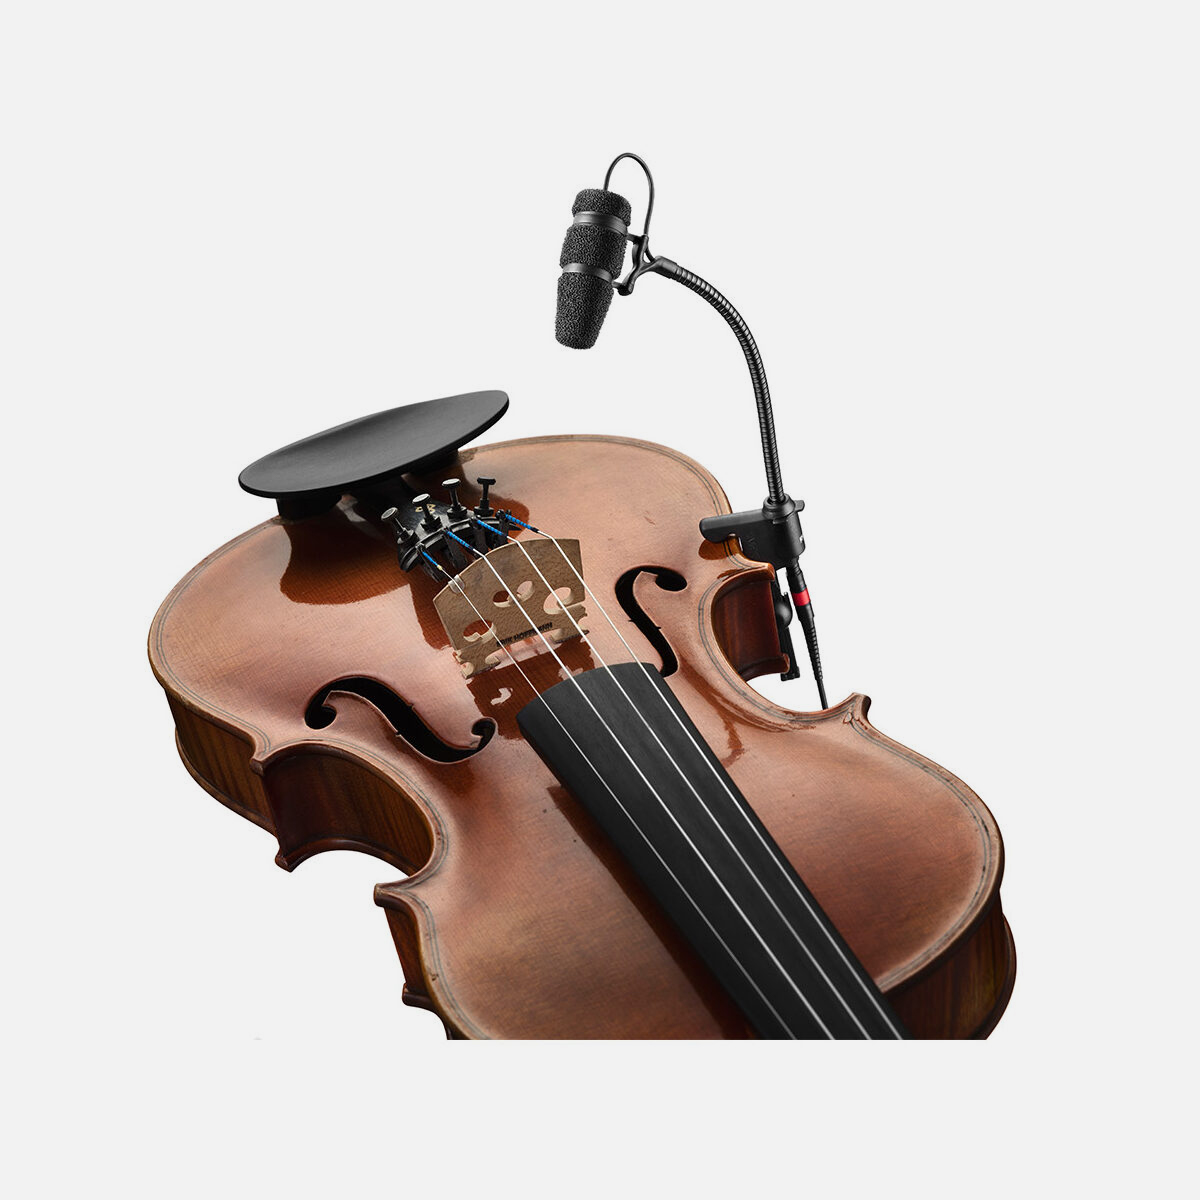 DPA 4099 Instrument Microphone for Violin & Banjo